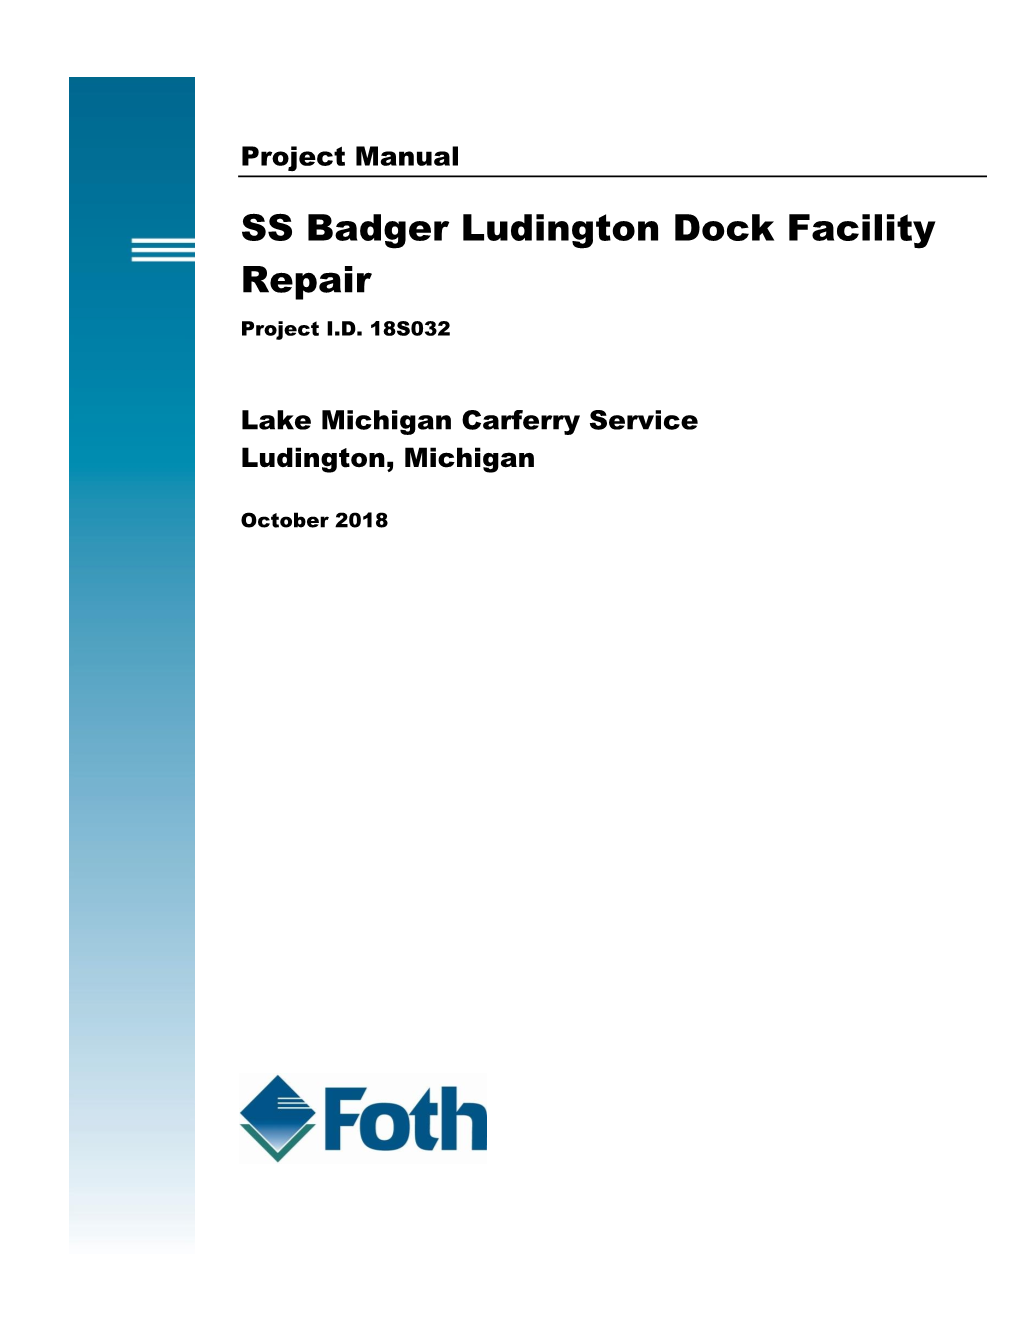 SS Badger Ludington Dock Facility Repair Project I.D